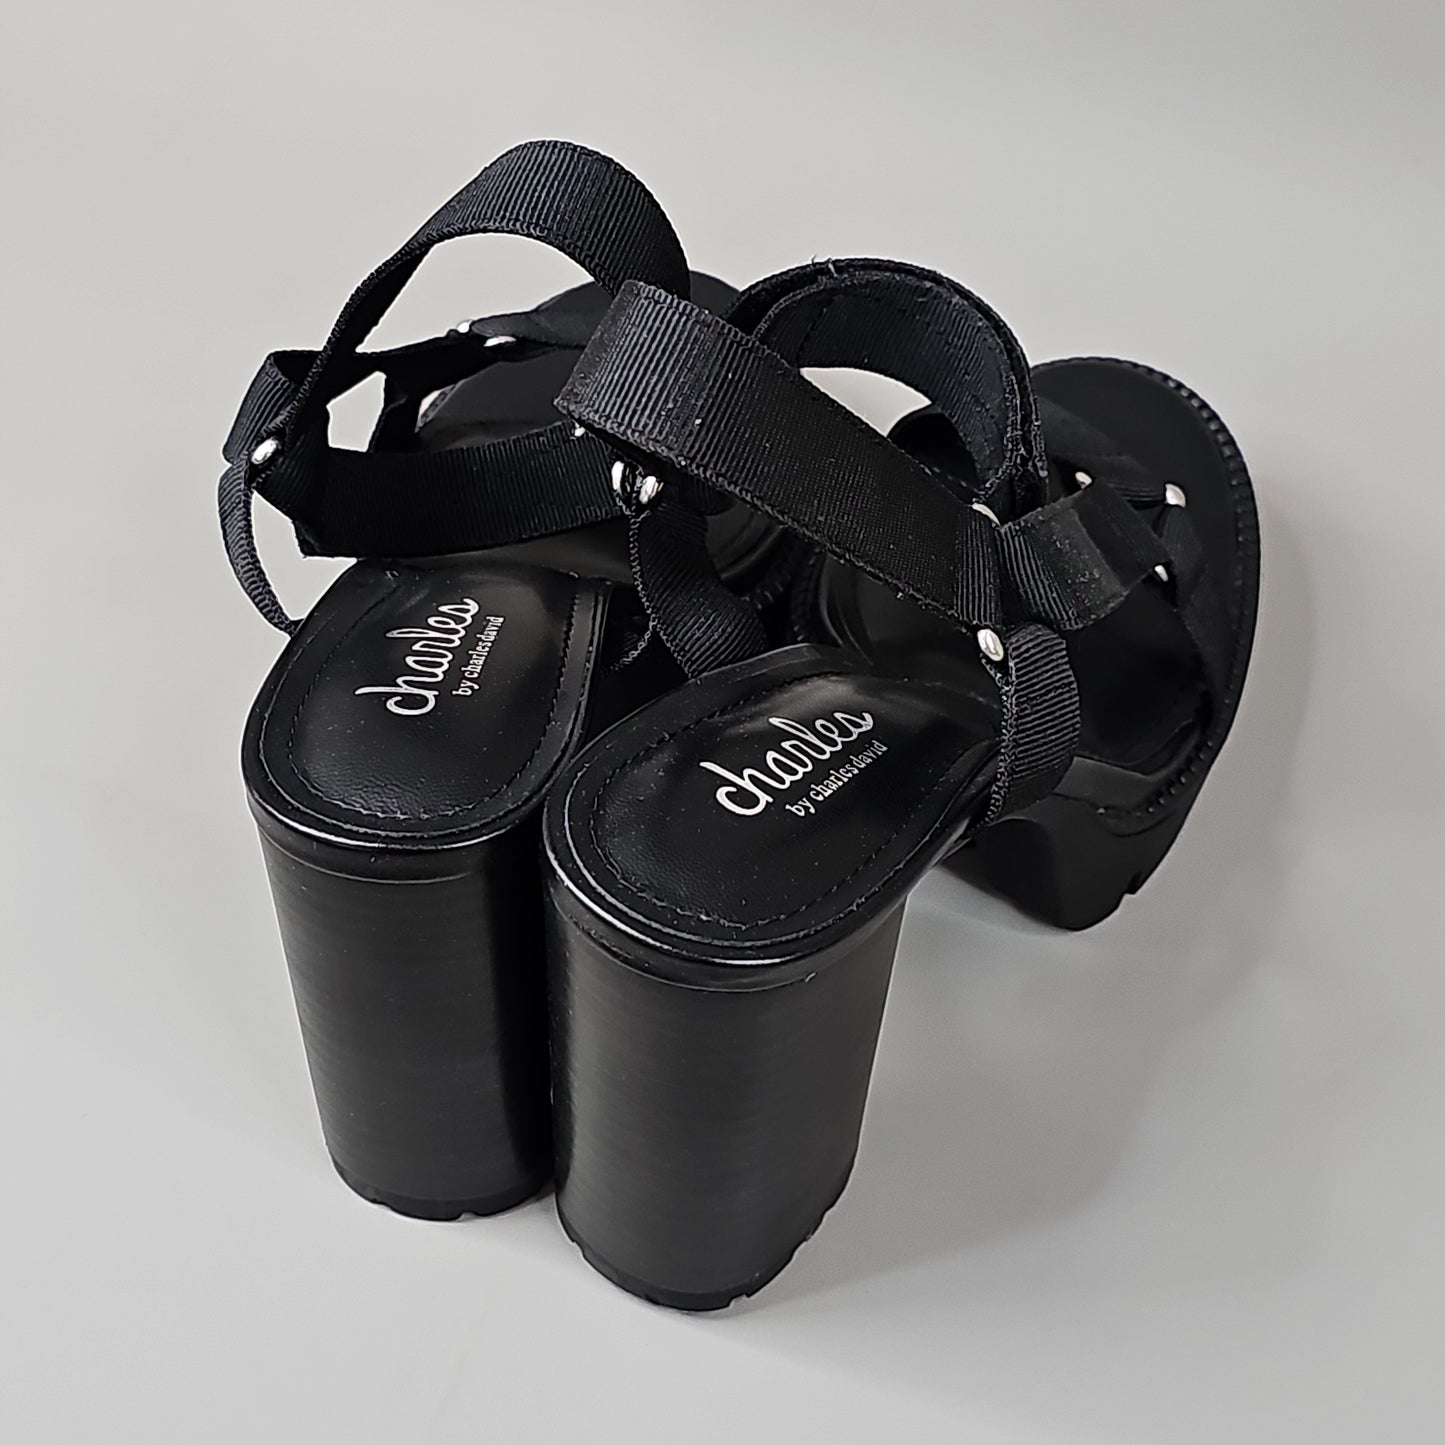 CHARLES BY CHARLES DAVID Women's Vast Sport Sandal Shoe Sz 6 M Black (New)